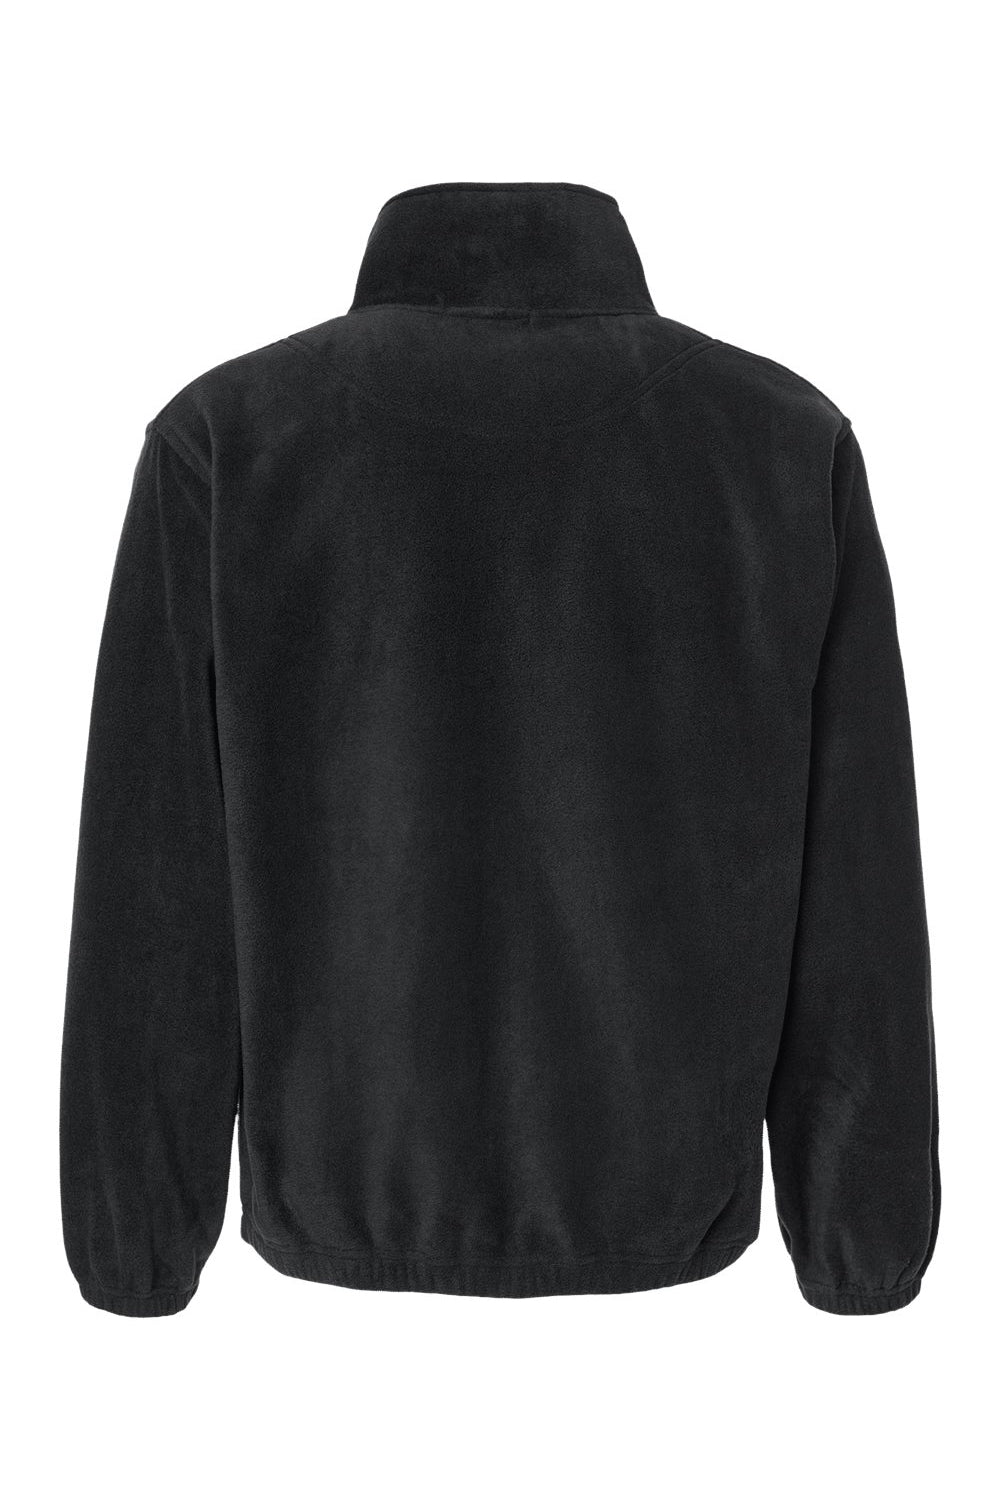 Burnside 3062 Mens Polar Fleece Full Zip Sweatshirt Black Flat Back